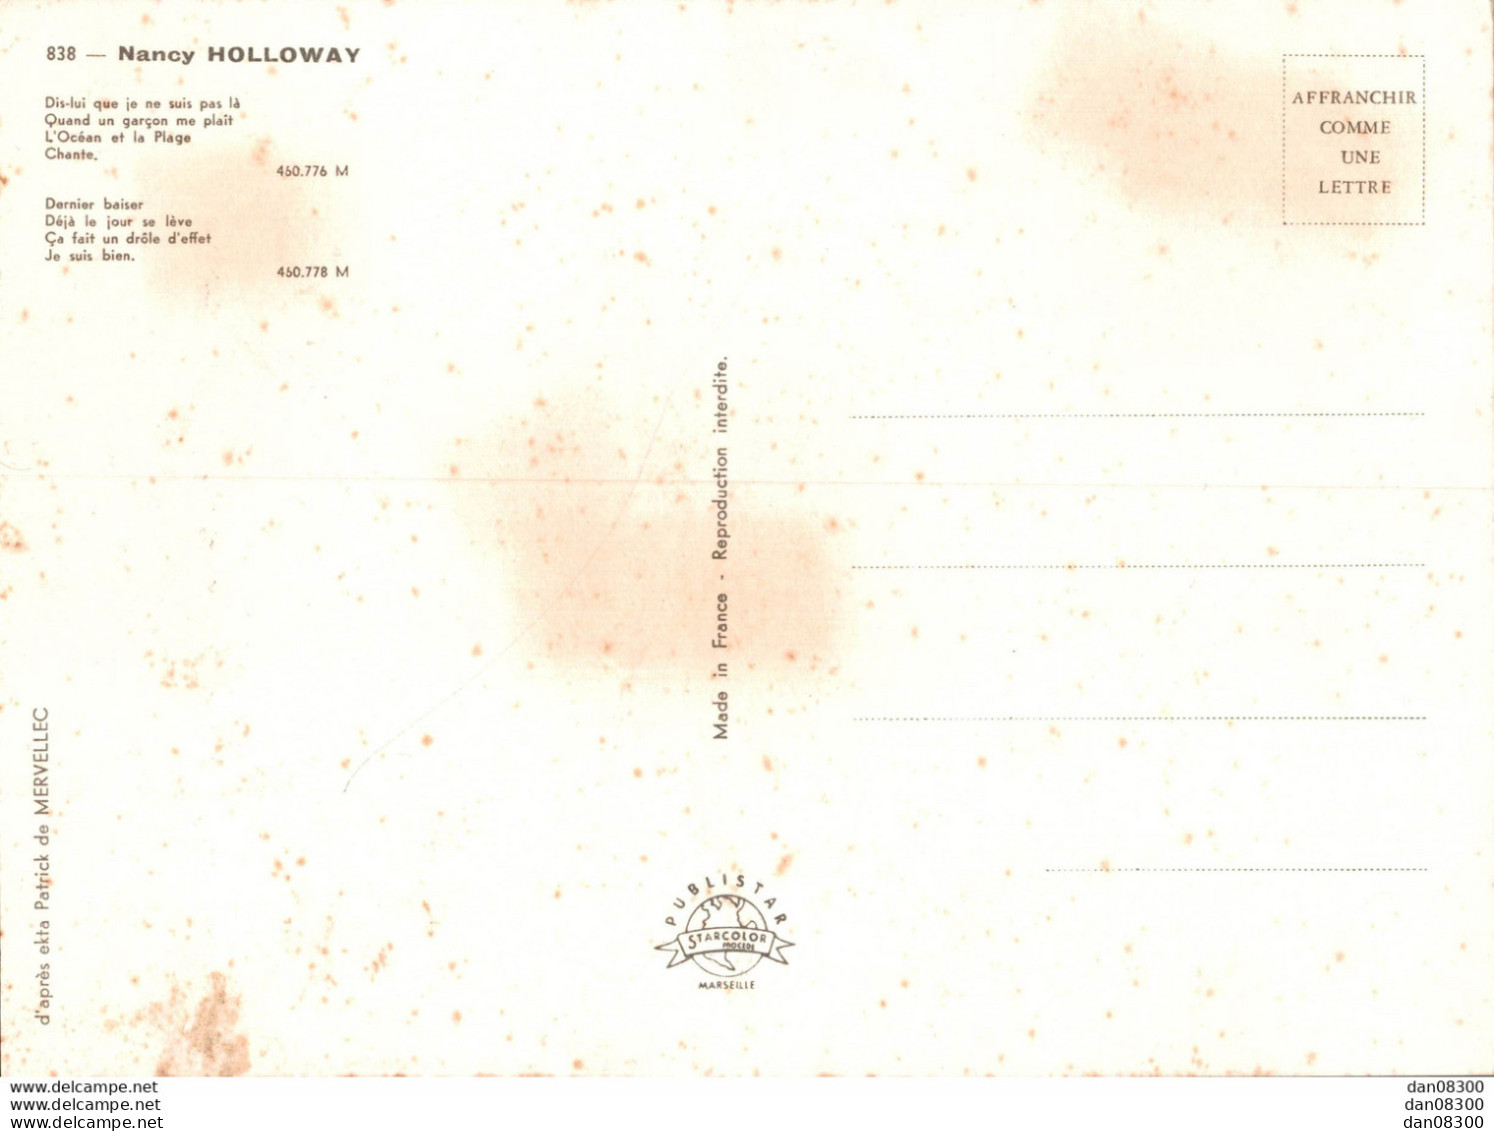 GRANDE CARTE DE 21 X 15 CMS DE NANCY HOLLOWAY - Chanteurs & Musiciens